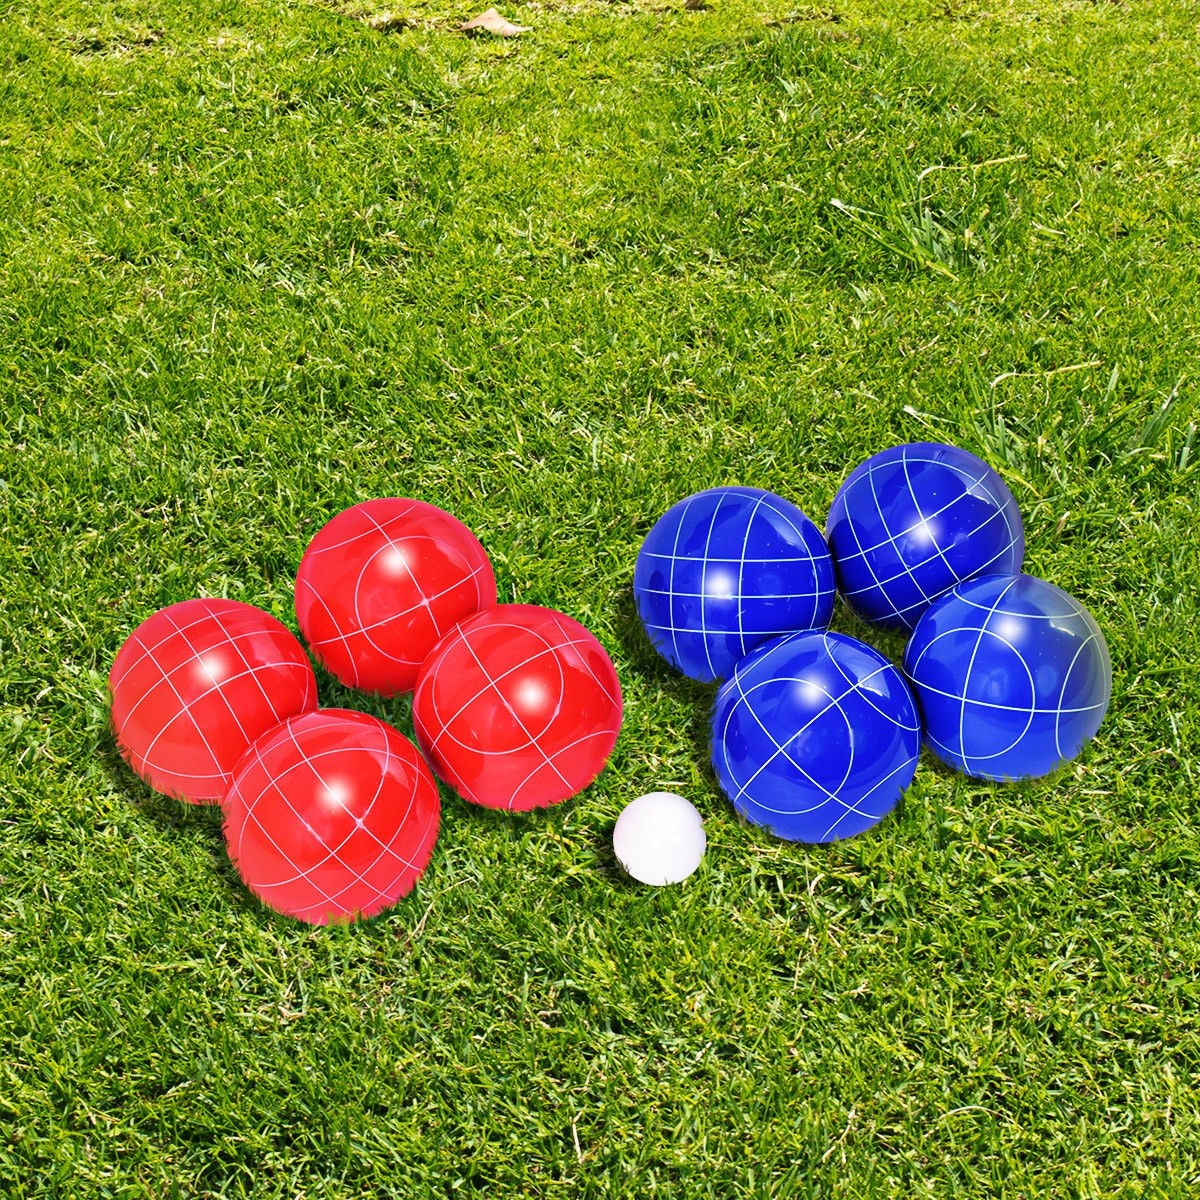 Goplus Backyard Bocce Ball Set With 8 Balls